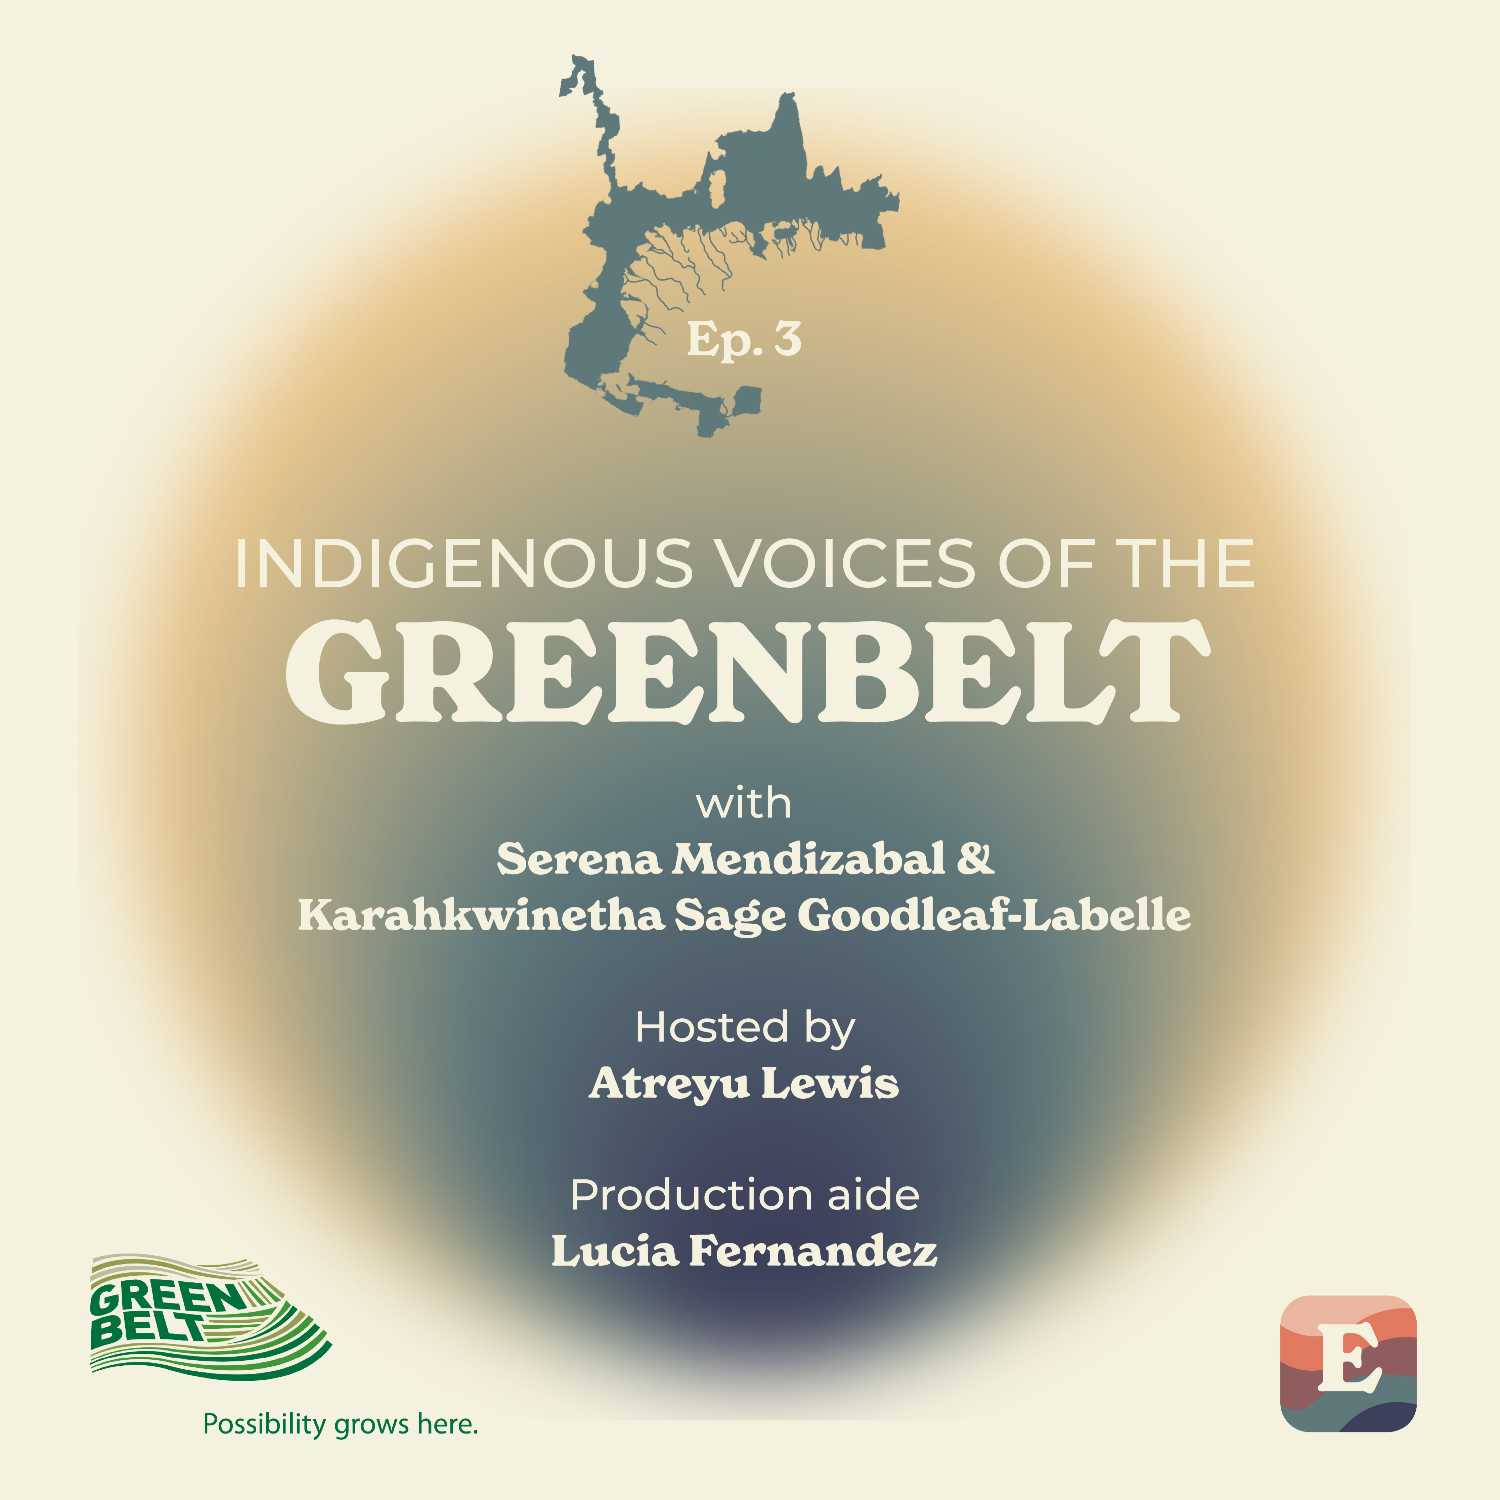 Voices of the Greenbelt Ep 3: Indigenous Voices of the Greenbelt with Serena Mendizabal & Karahkwinetha Sage Goodleaf-Labelle